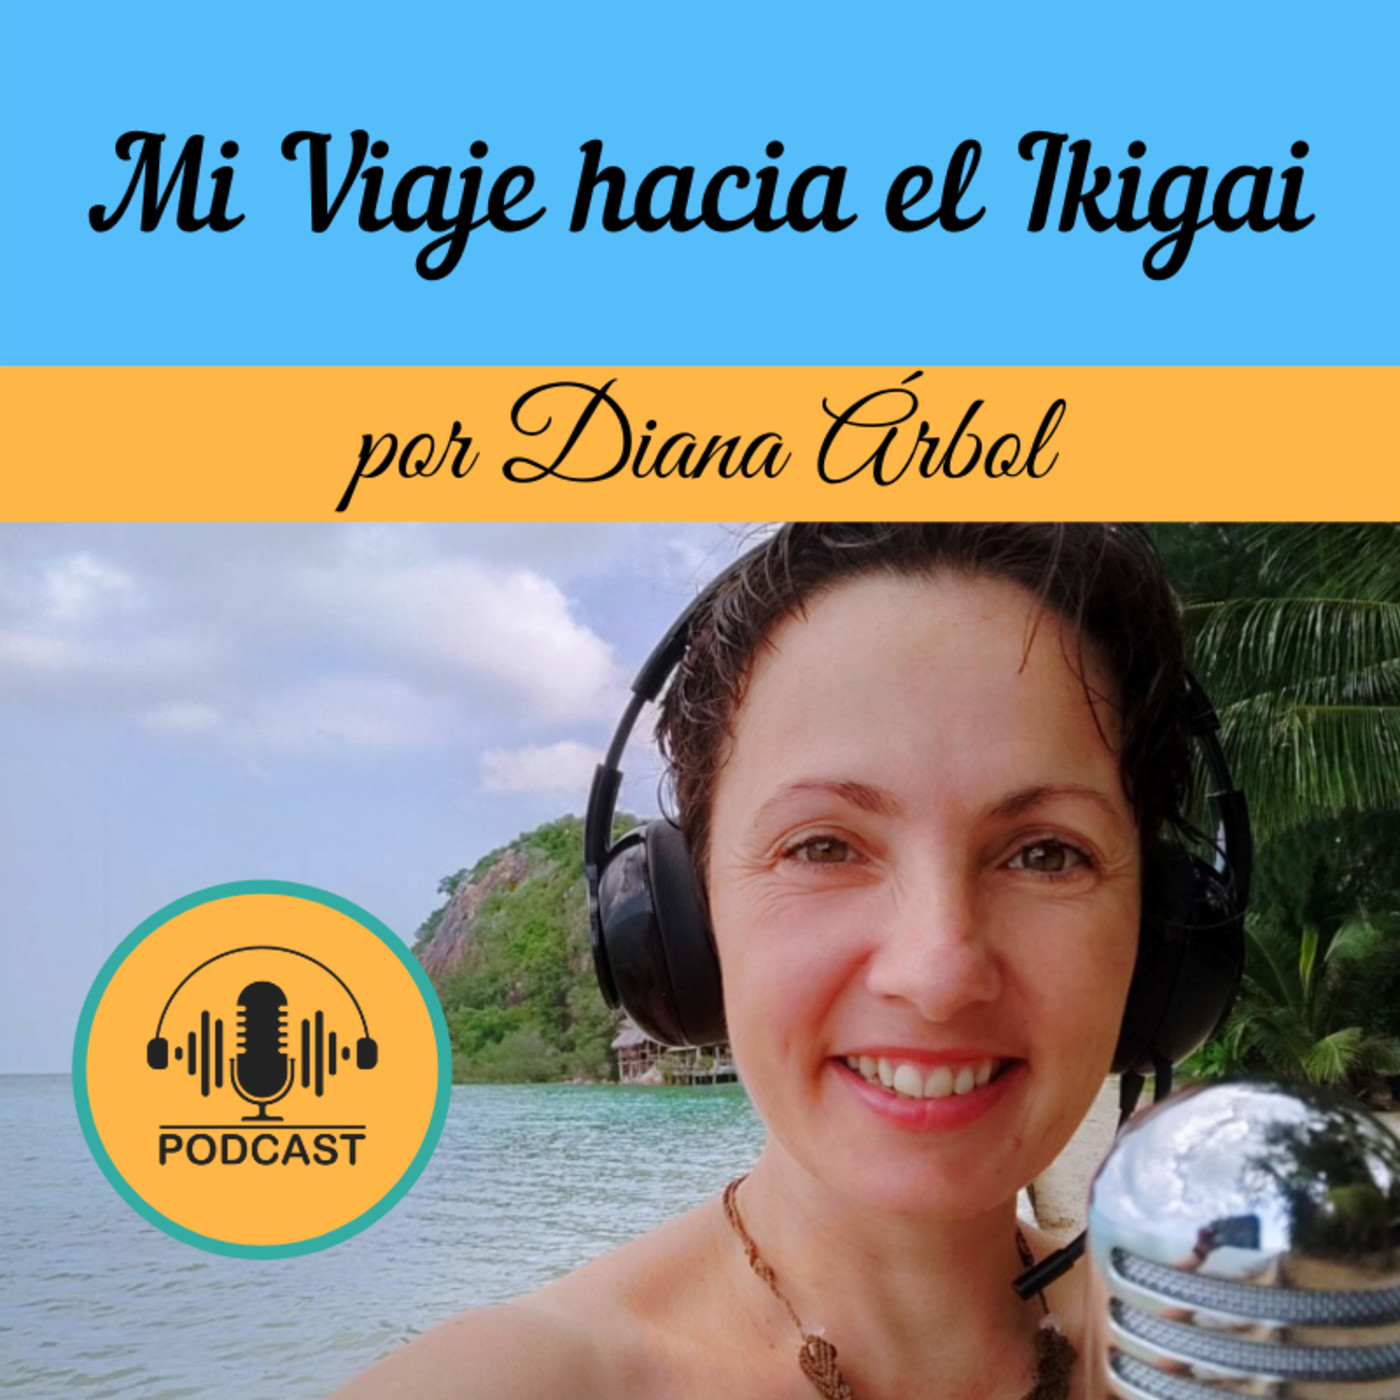 Mi viaje hacia el Ikigai - Podcast de Diana Árbol